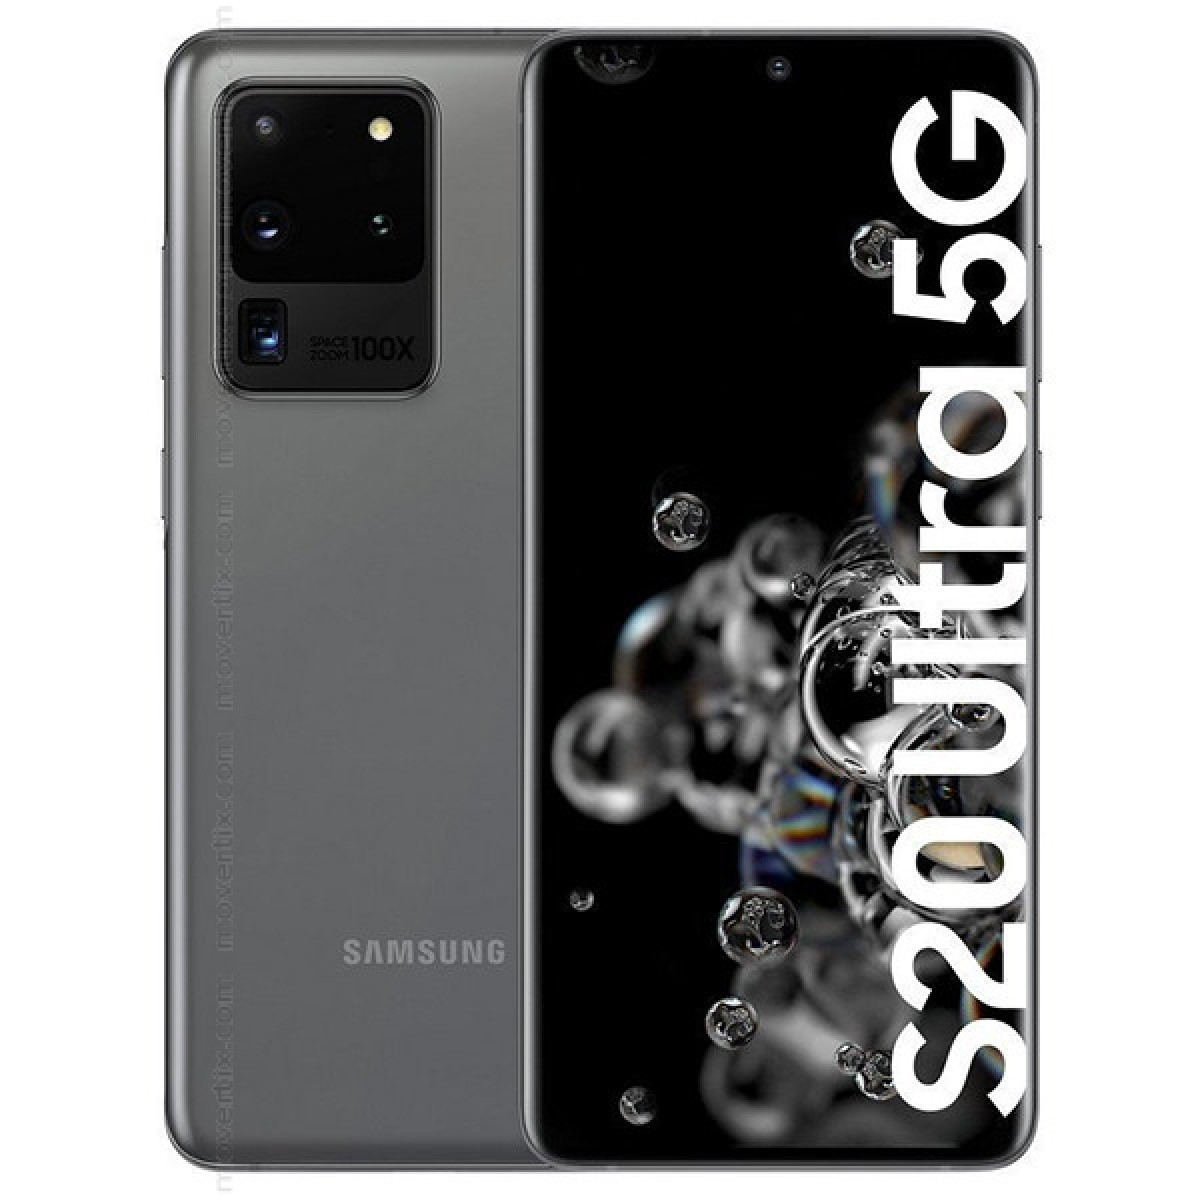 Samsung Galaxy S20 Ultra 5G price in Bangladesh 2022 | bd price